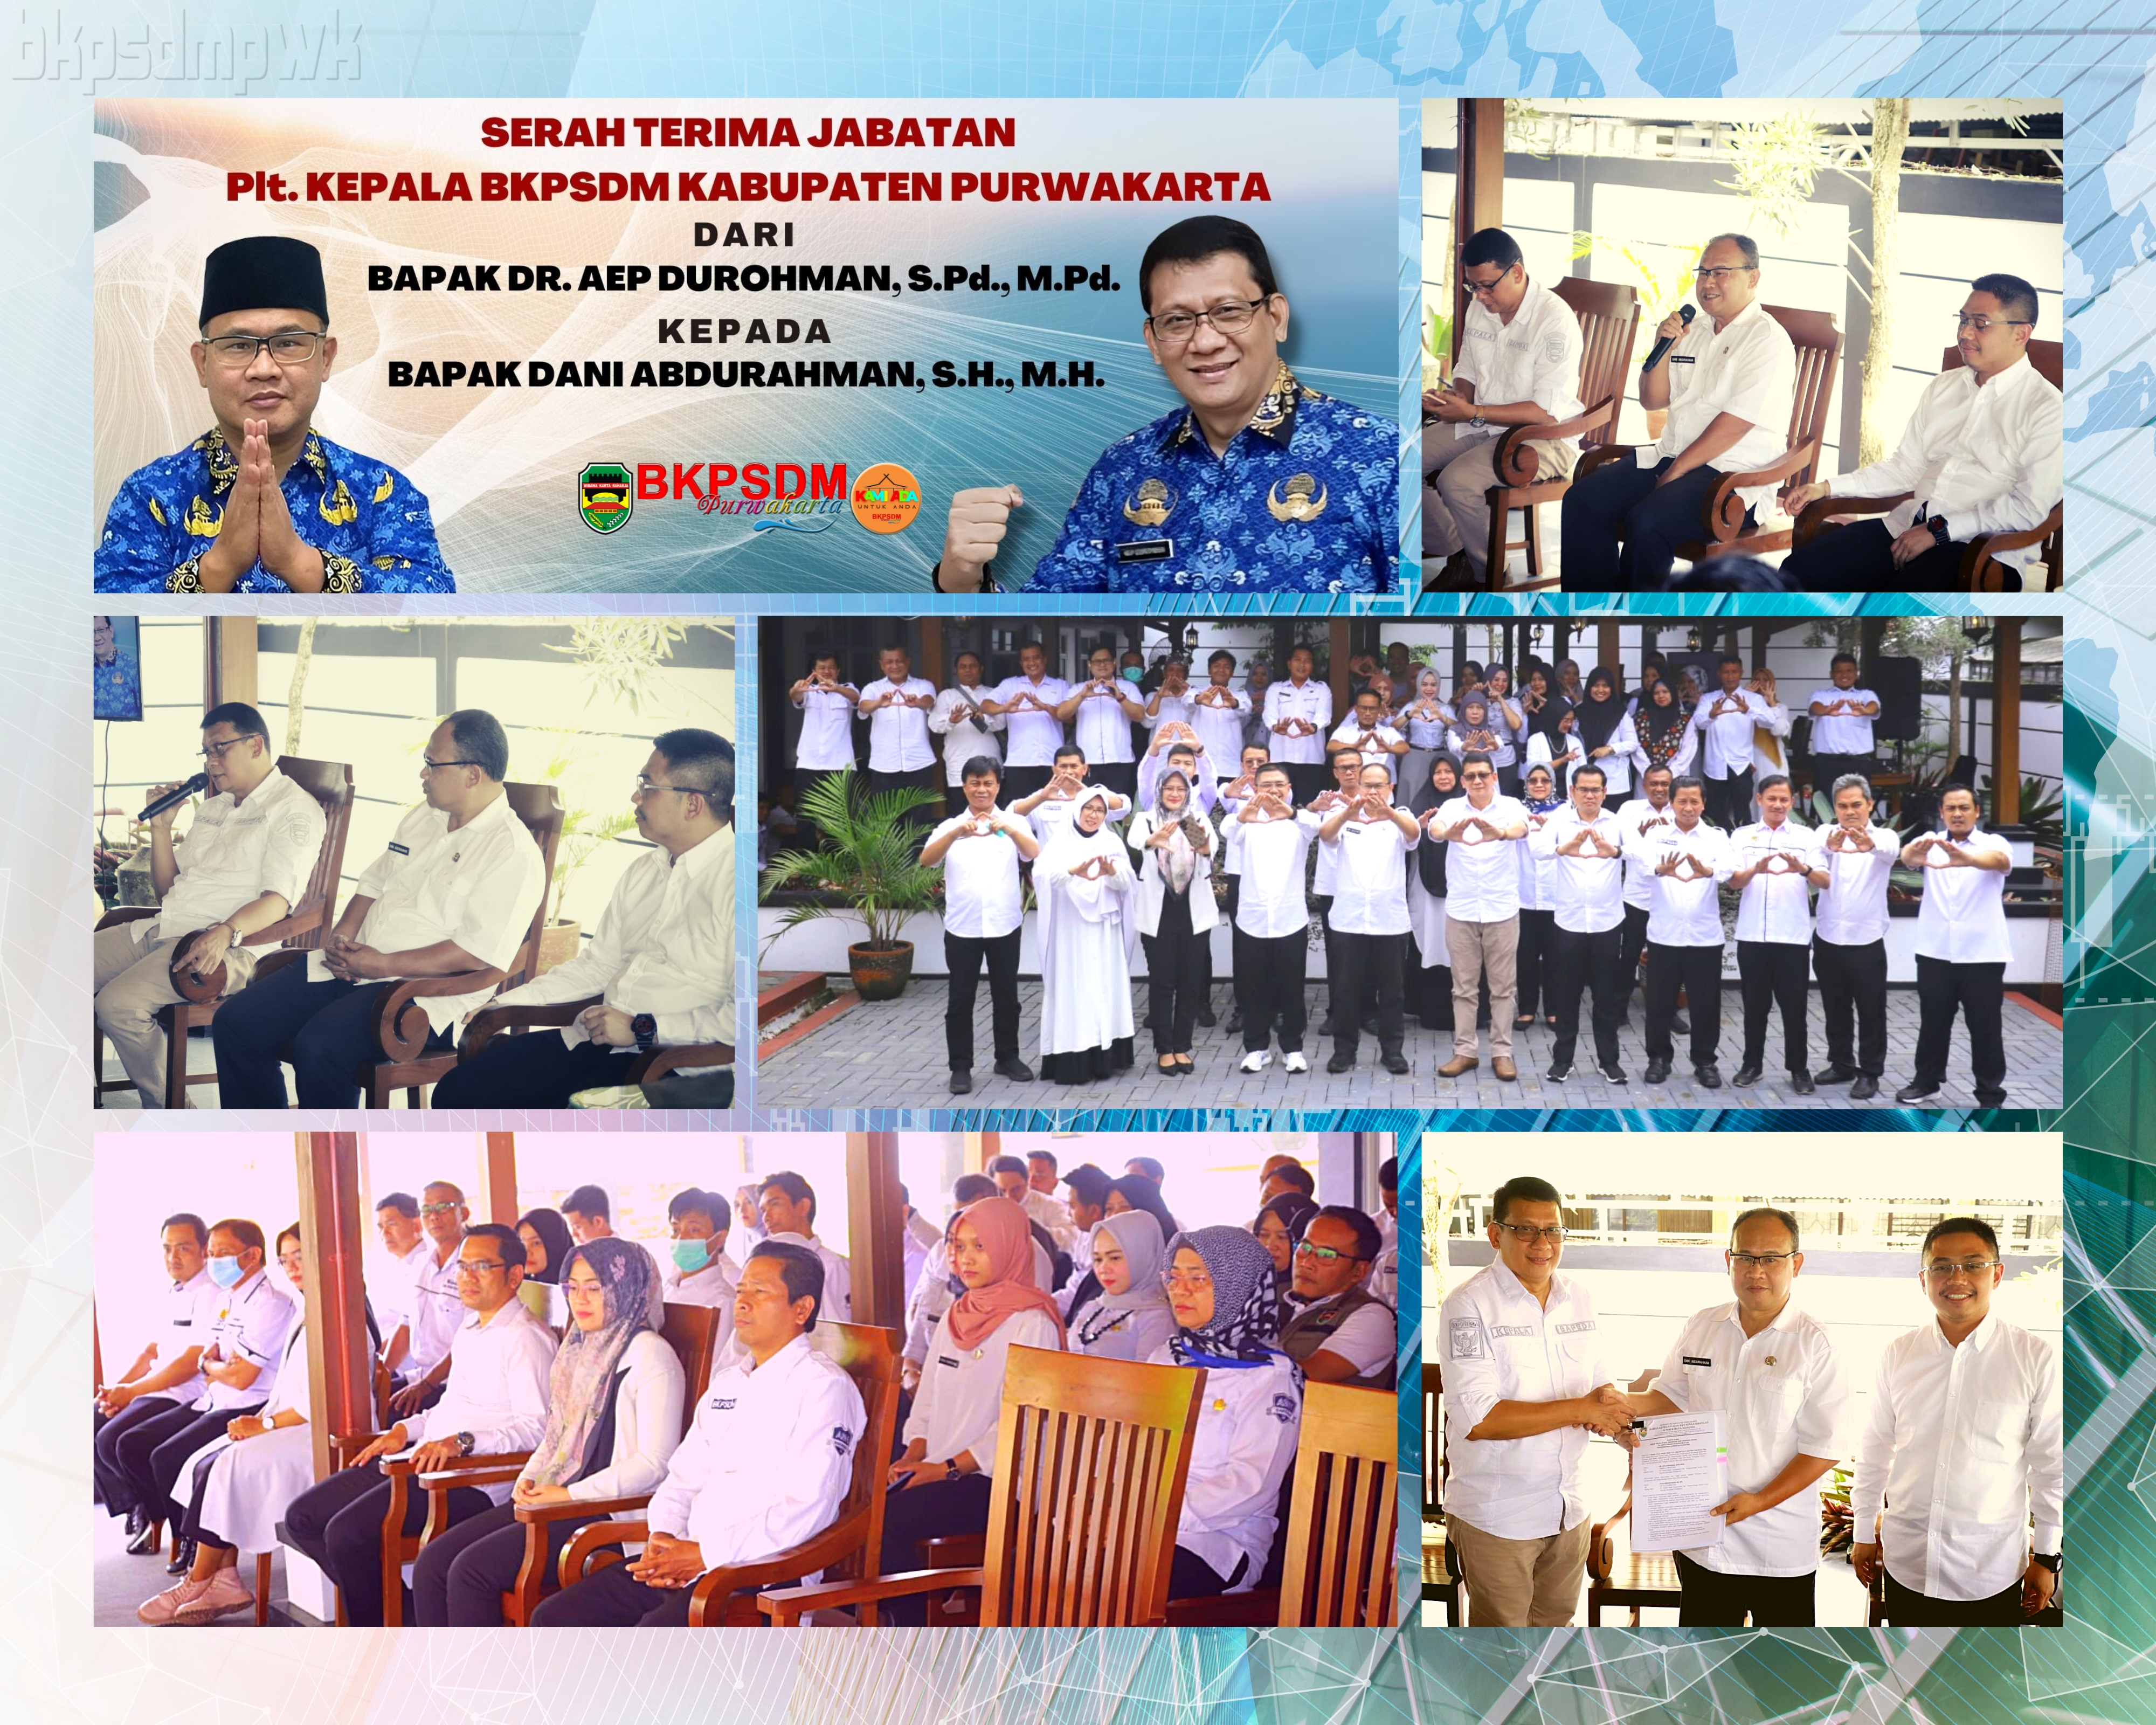 Serah Terima Jabatan Plt. Kepala B K P S D M Kabupaten Purwakarta